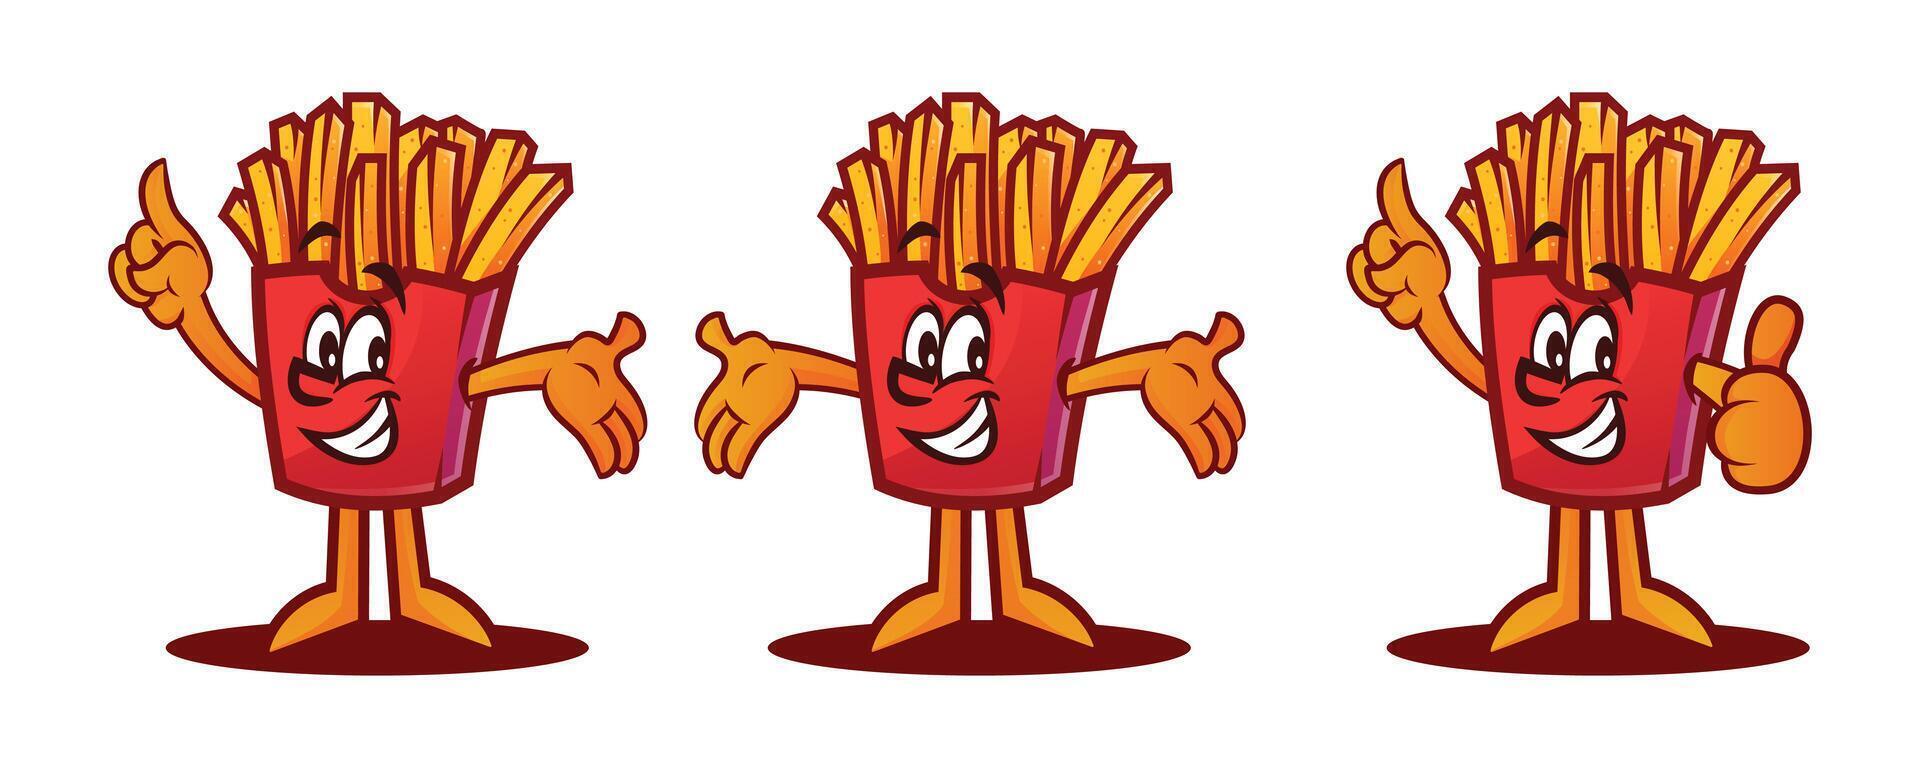 francés papas fritas rápido comida mascota en dibujos animados estilo. vector ilustración